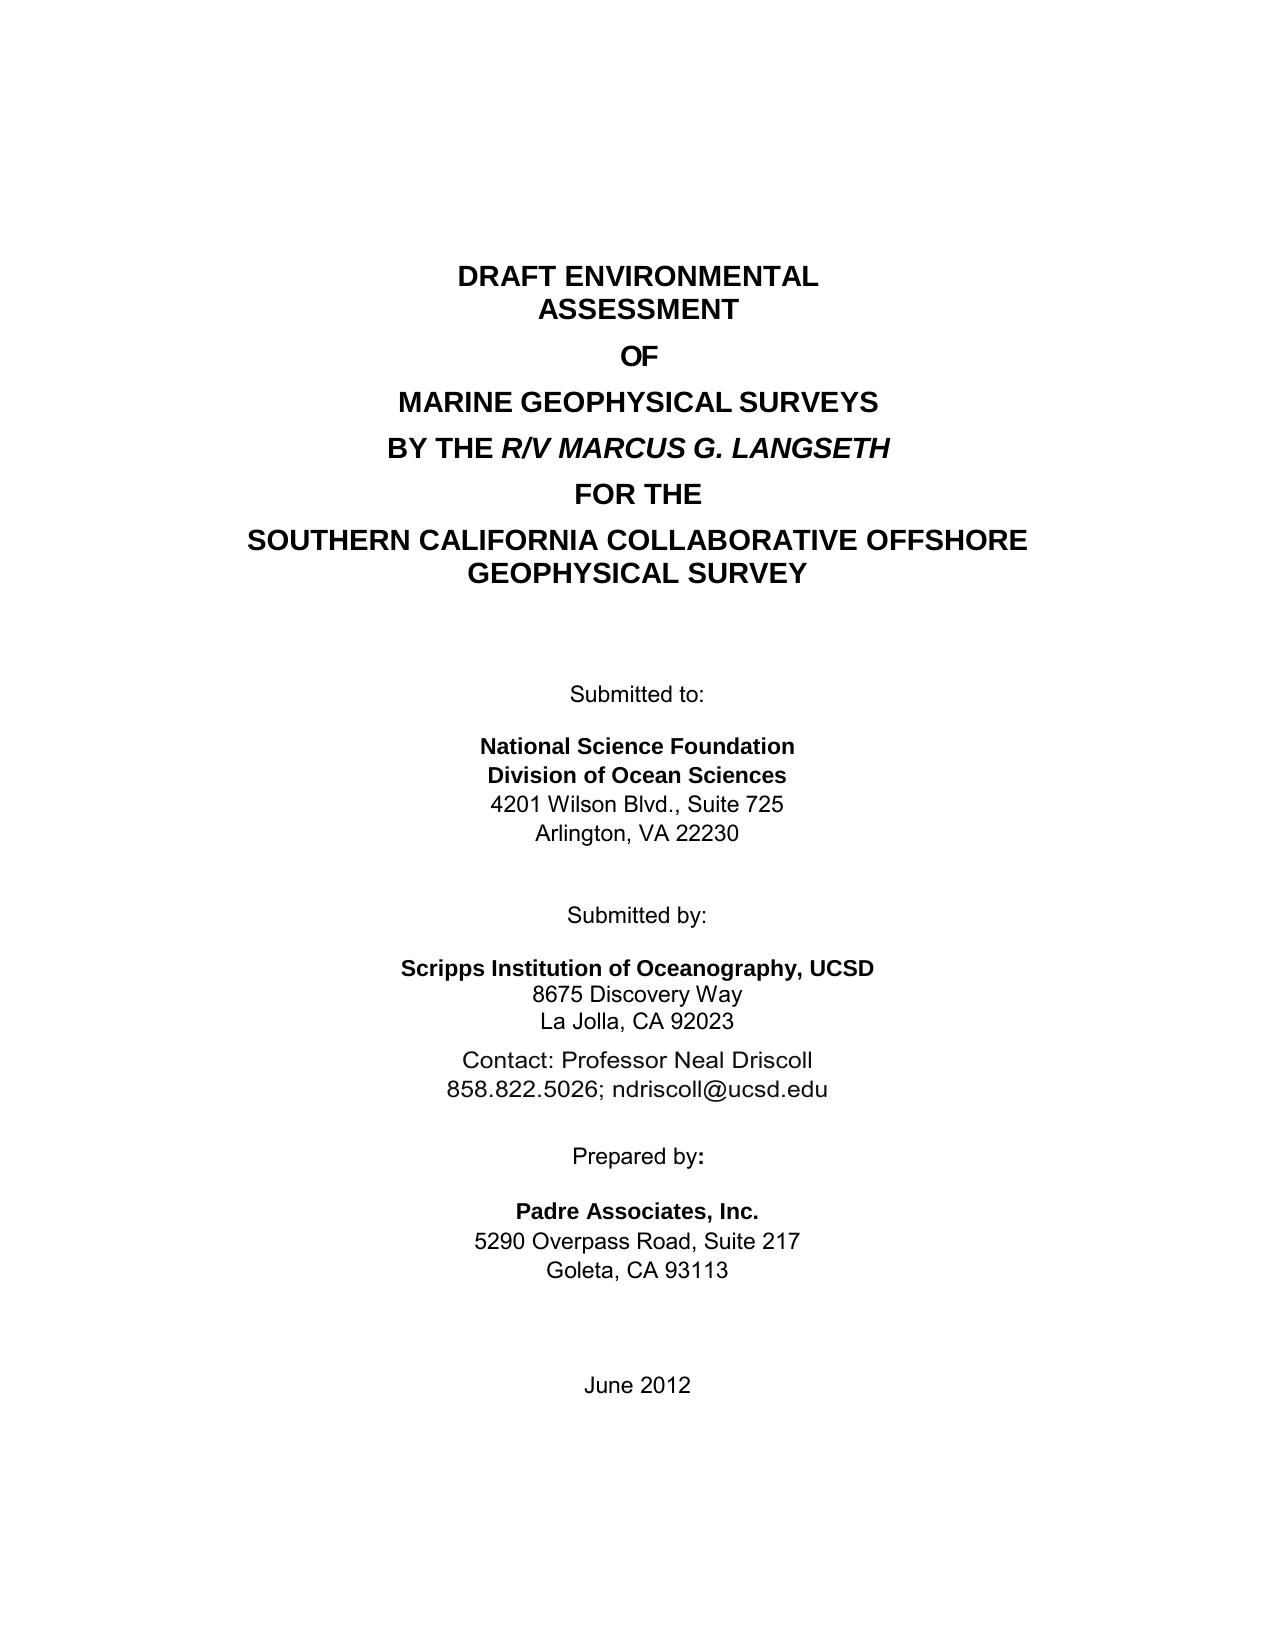 Draft Environmental assessment of marine geophysical surveys 2012